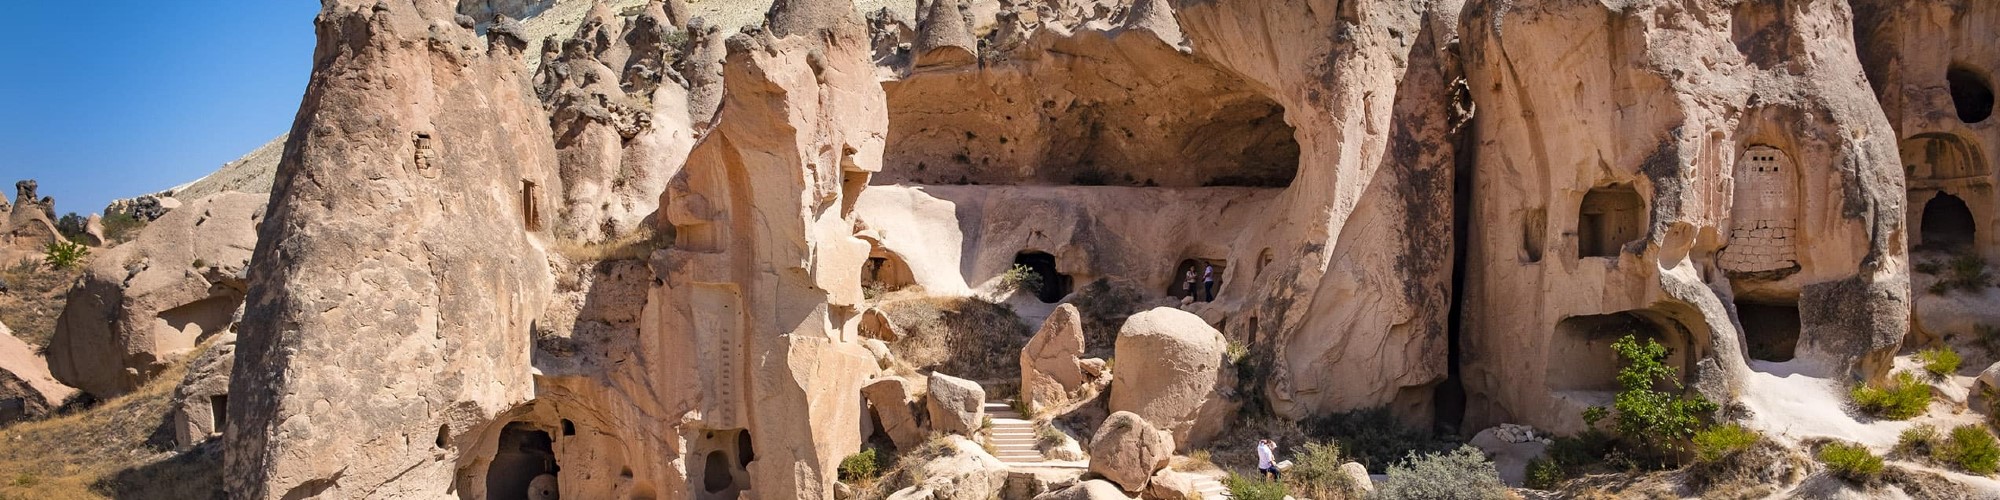 Cave Dwellings in Cappadocia